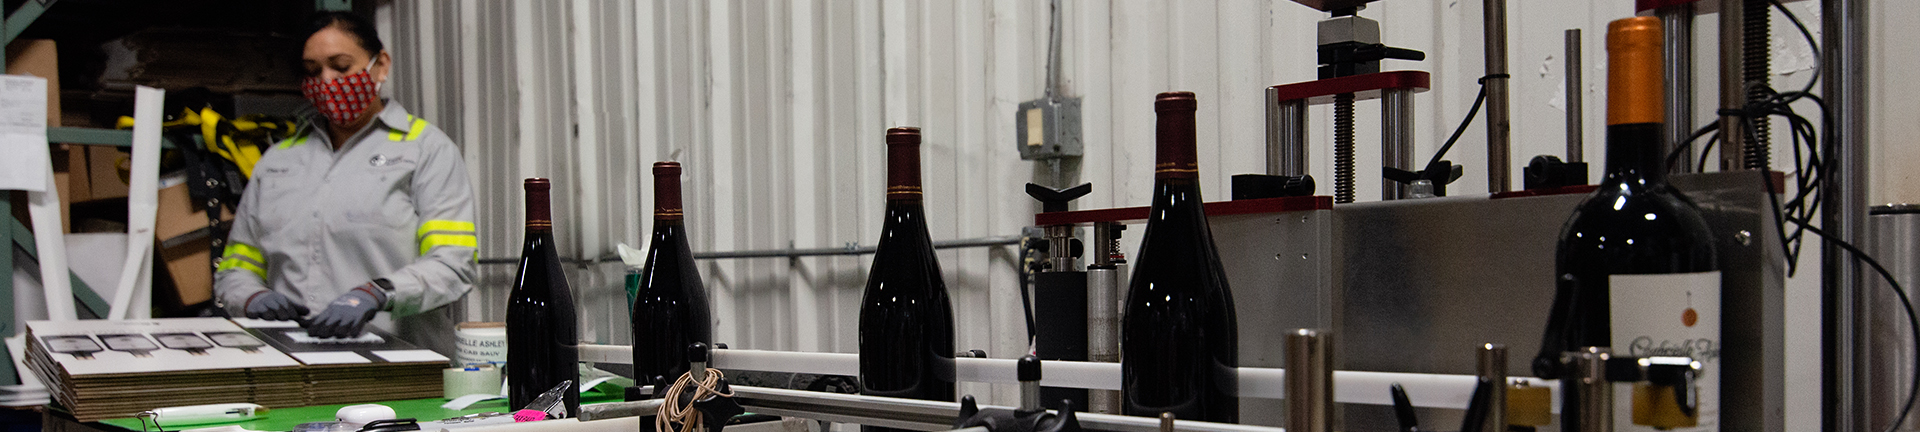 wine bottles on a conveyor belt